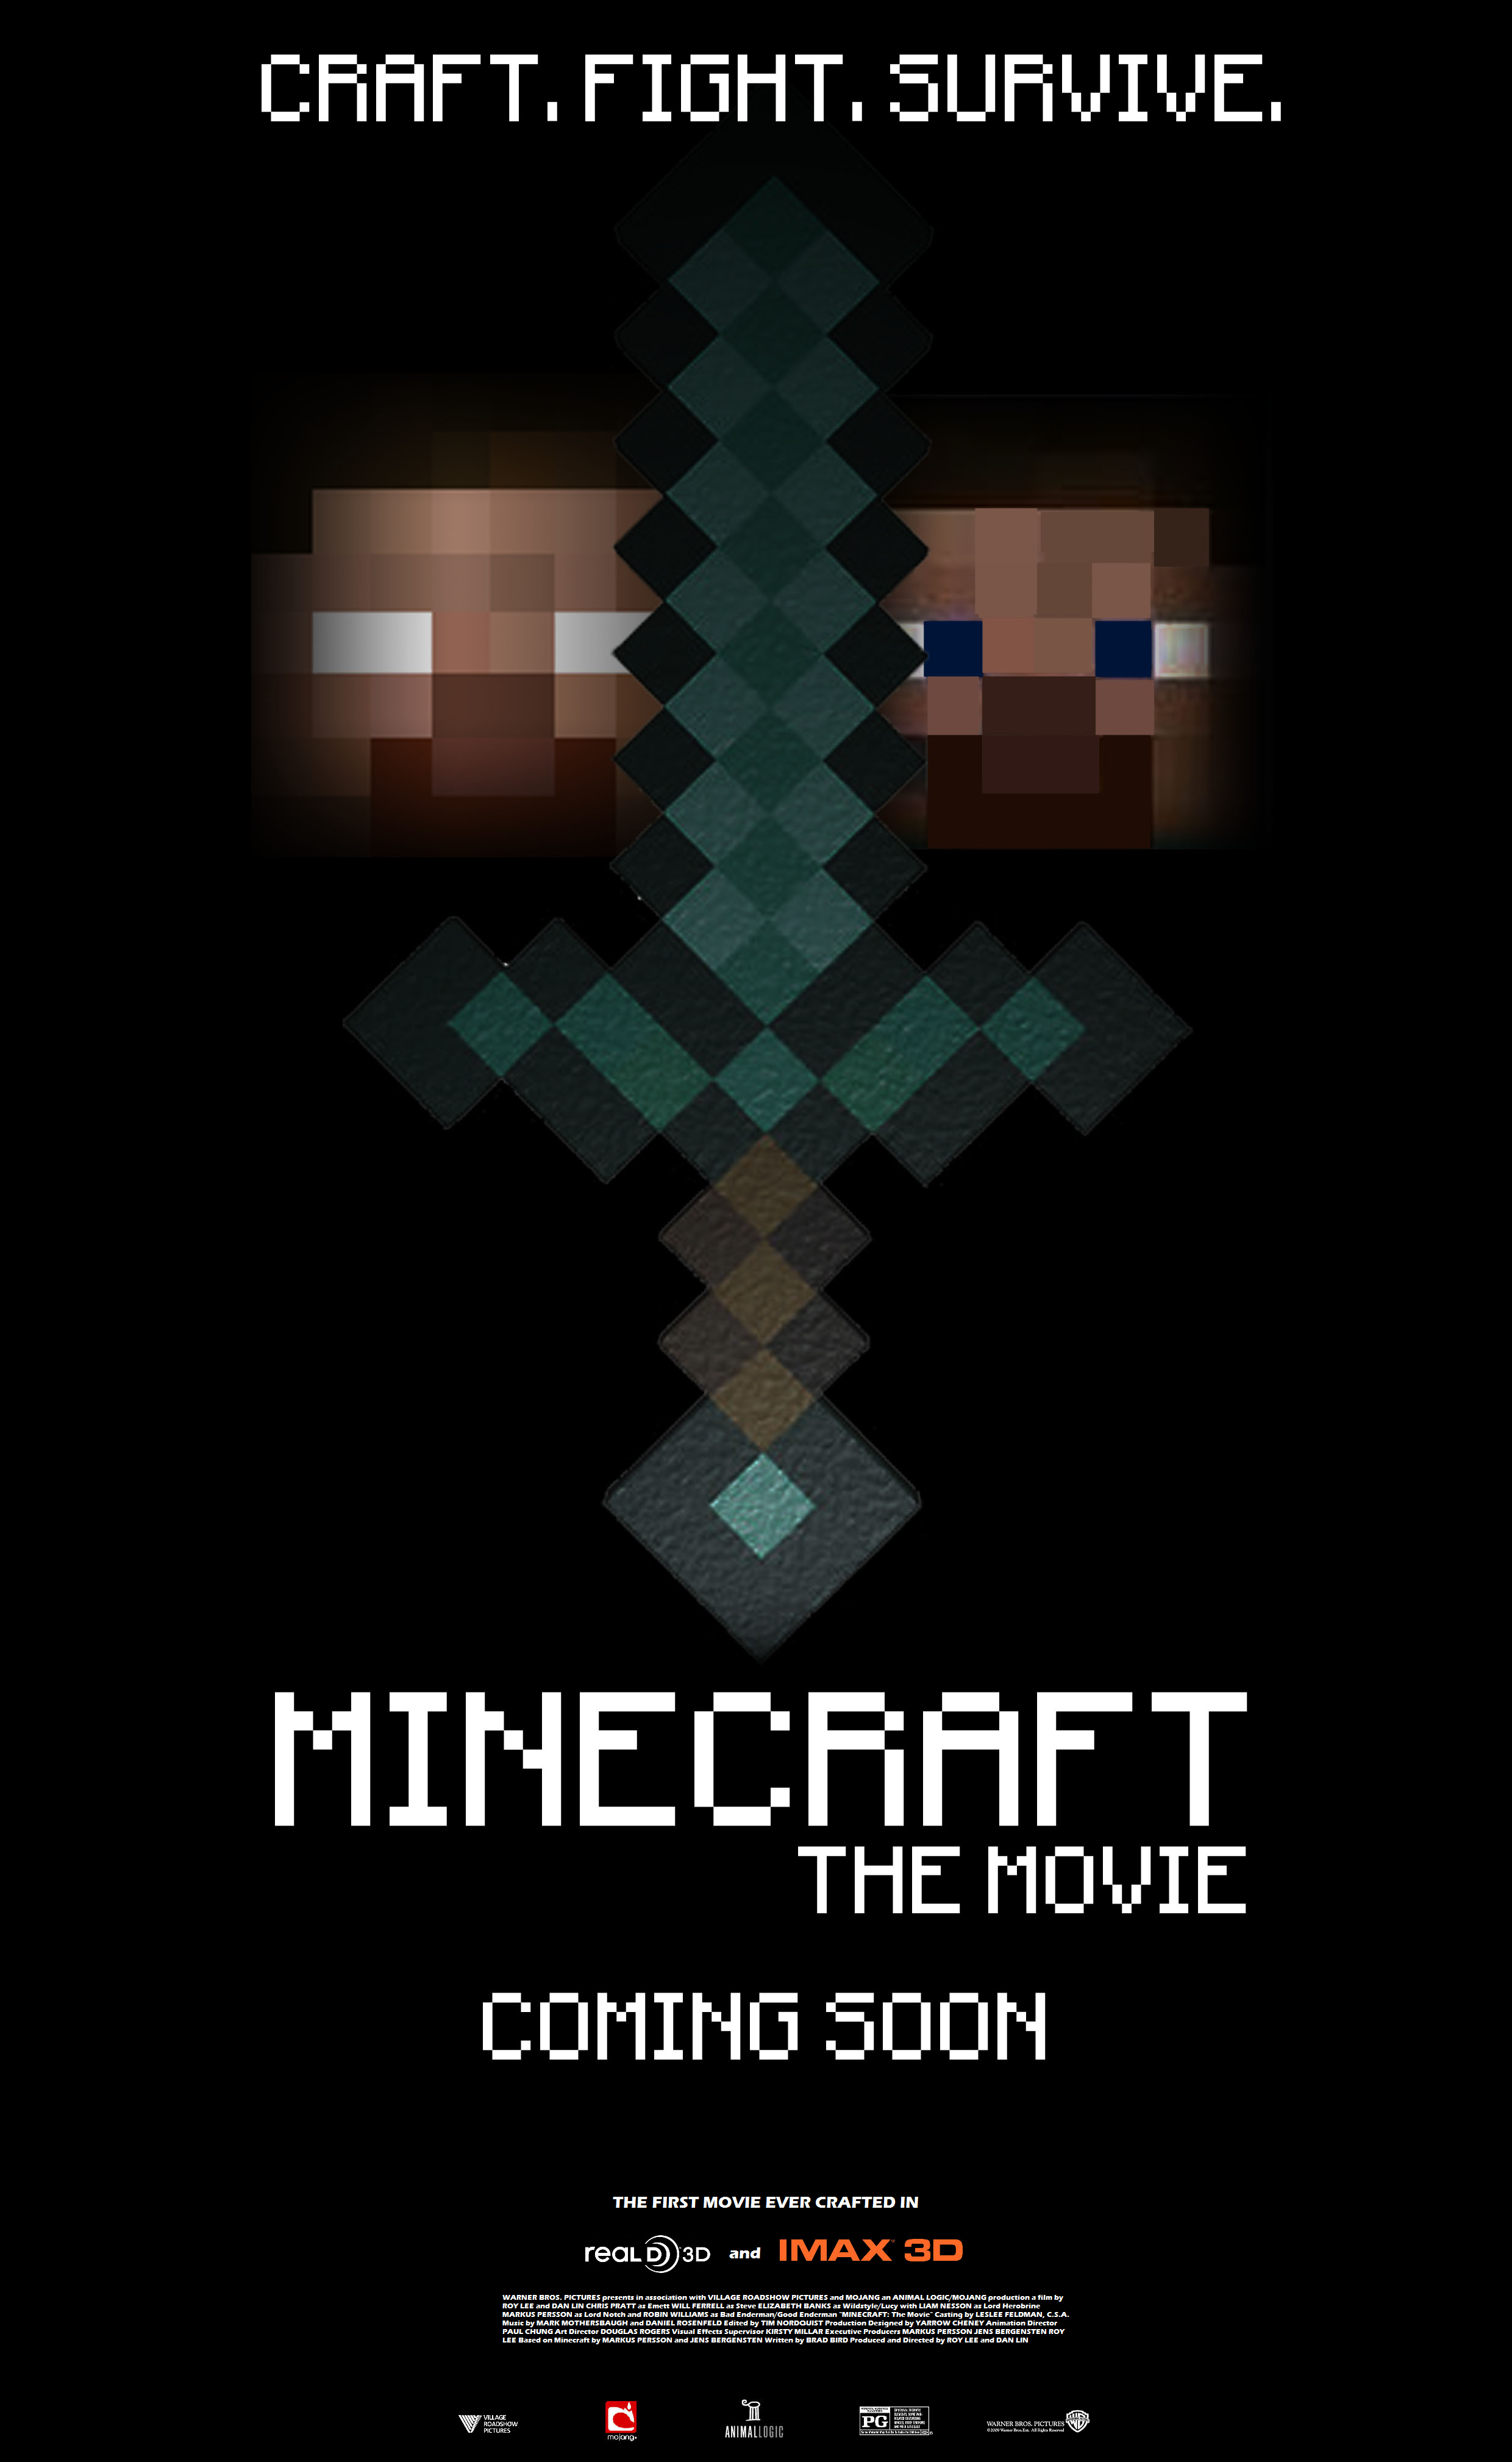 Minecraft The Movie (2015) Poster by RealMovieMaker9000 on DeviantArt